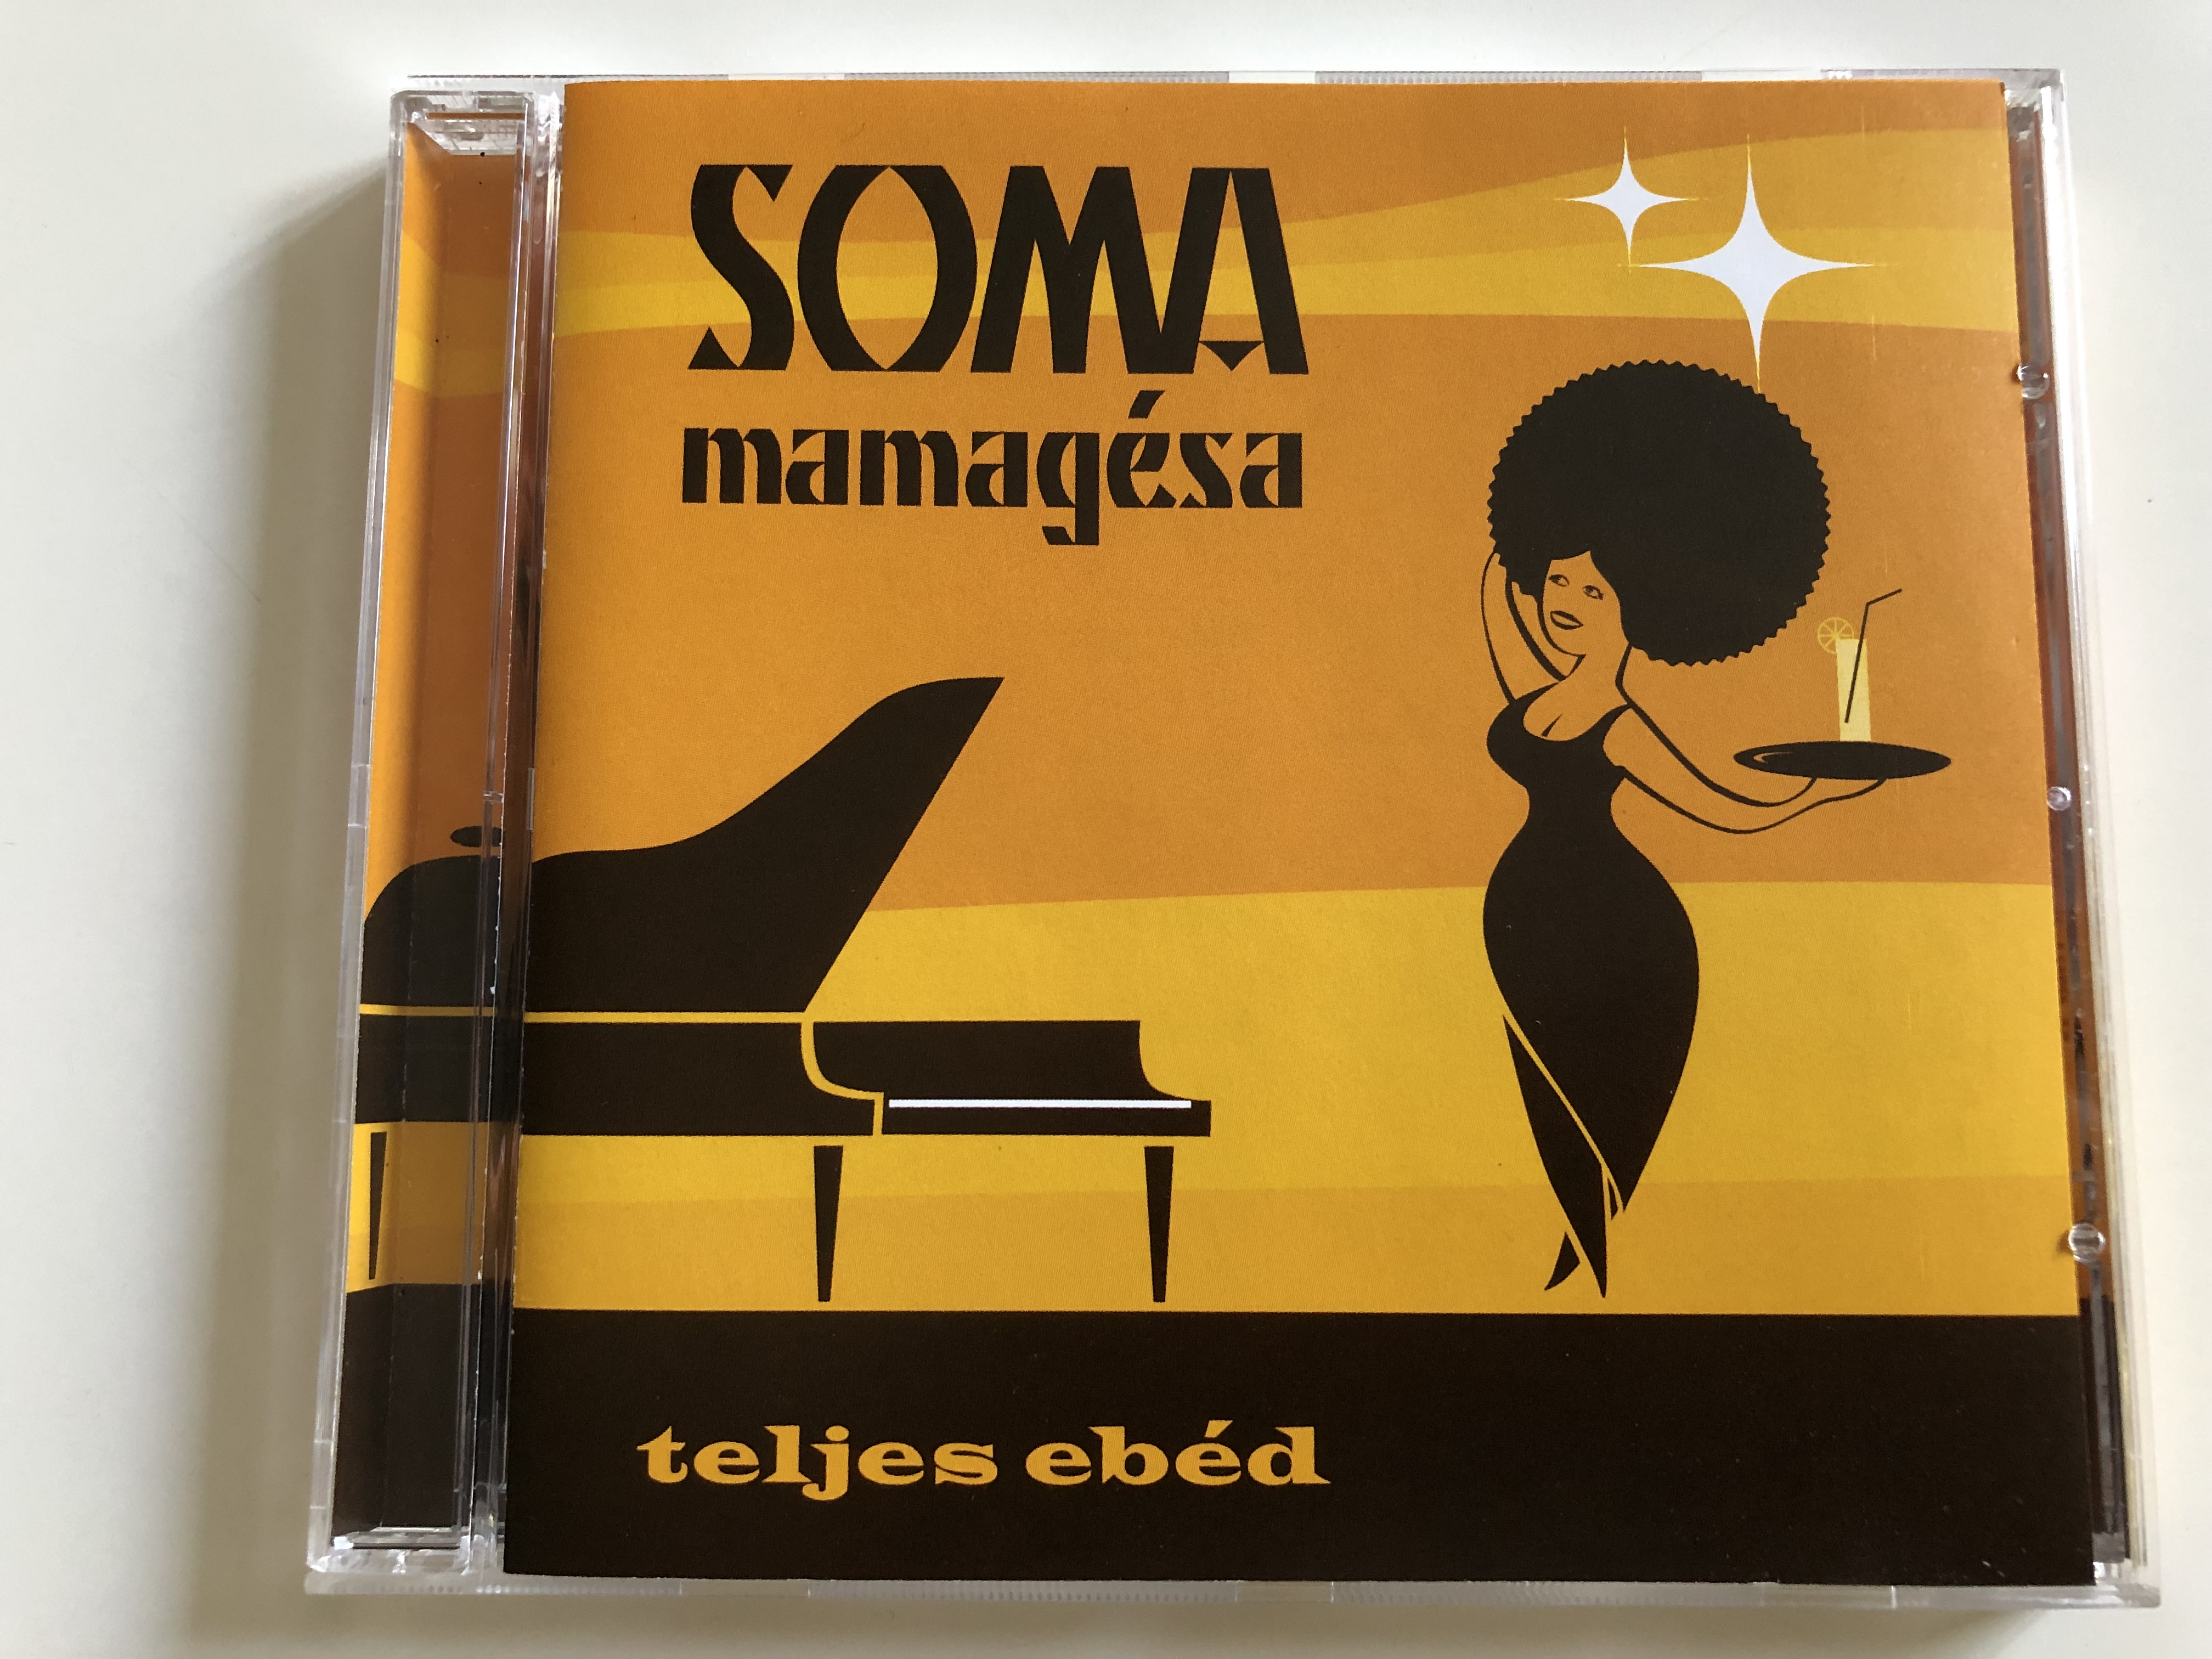 soma-mamg-sa-teljes-eb-d-audio-cd-2005-lyrics-soma-mirror-media-1-.jpg